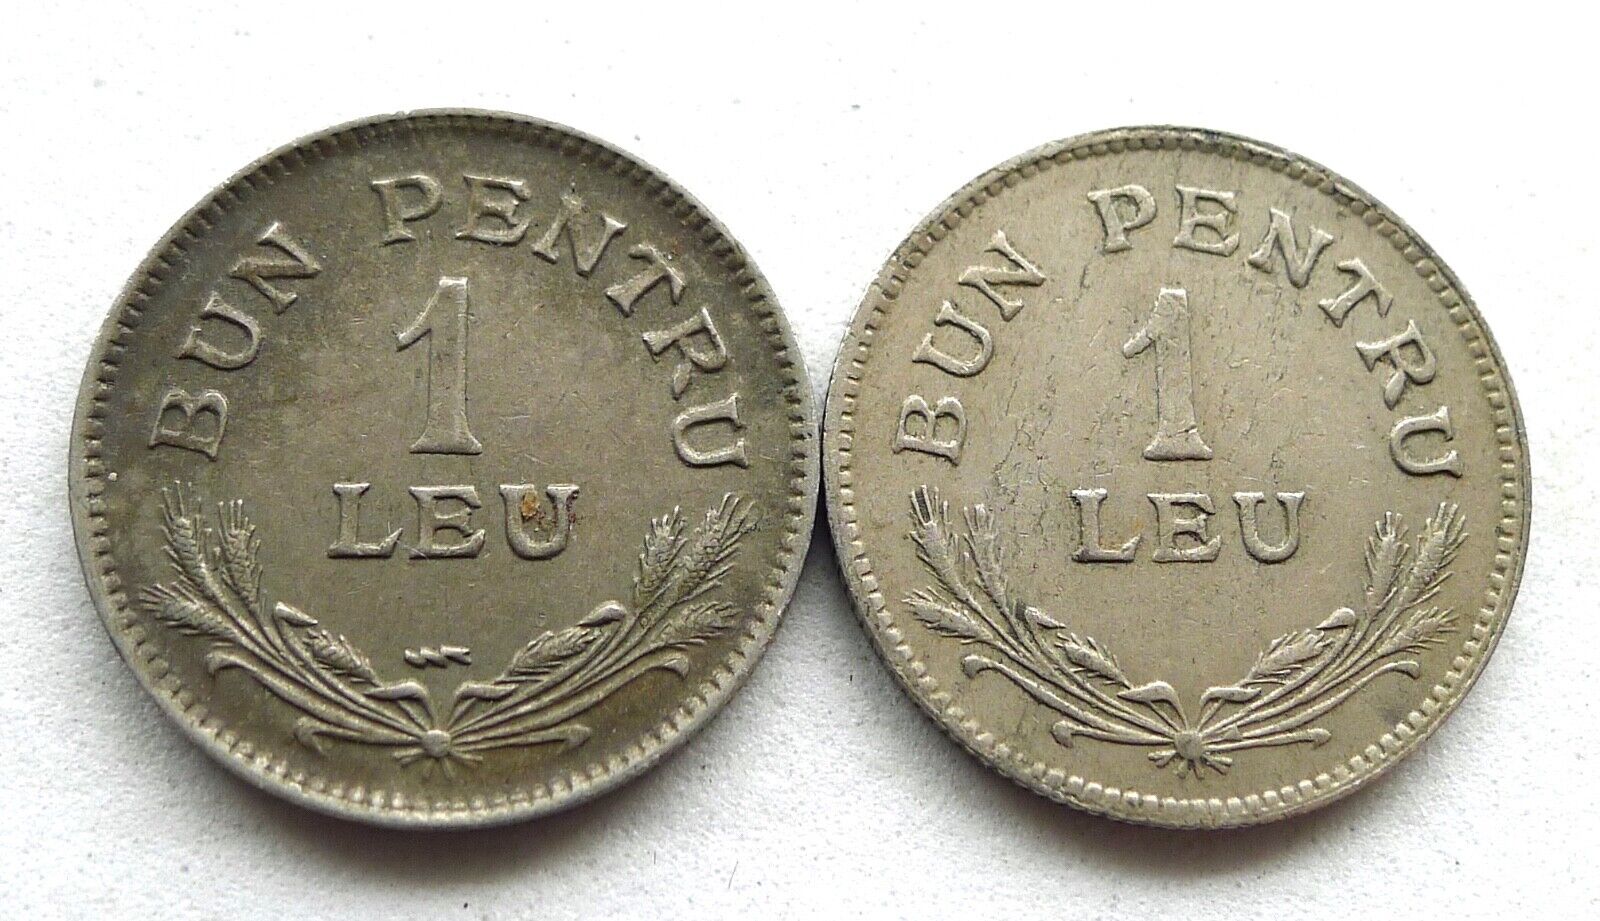 ROMANIA 1 LEU 1924-B BRUSSELS & 1924-P POISSY MINT, BOTH AEF, SOME TONING. KM#46 Без бренда - фотография #2